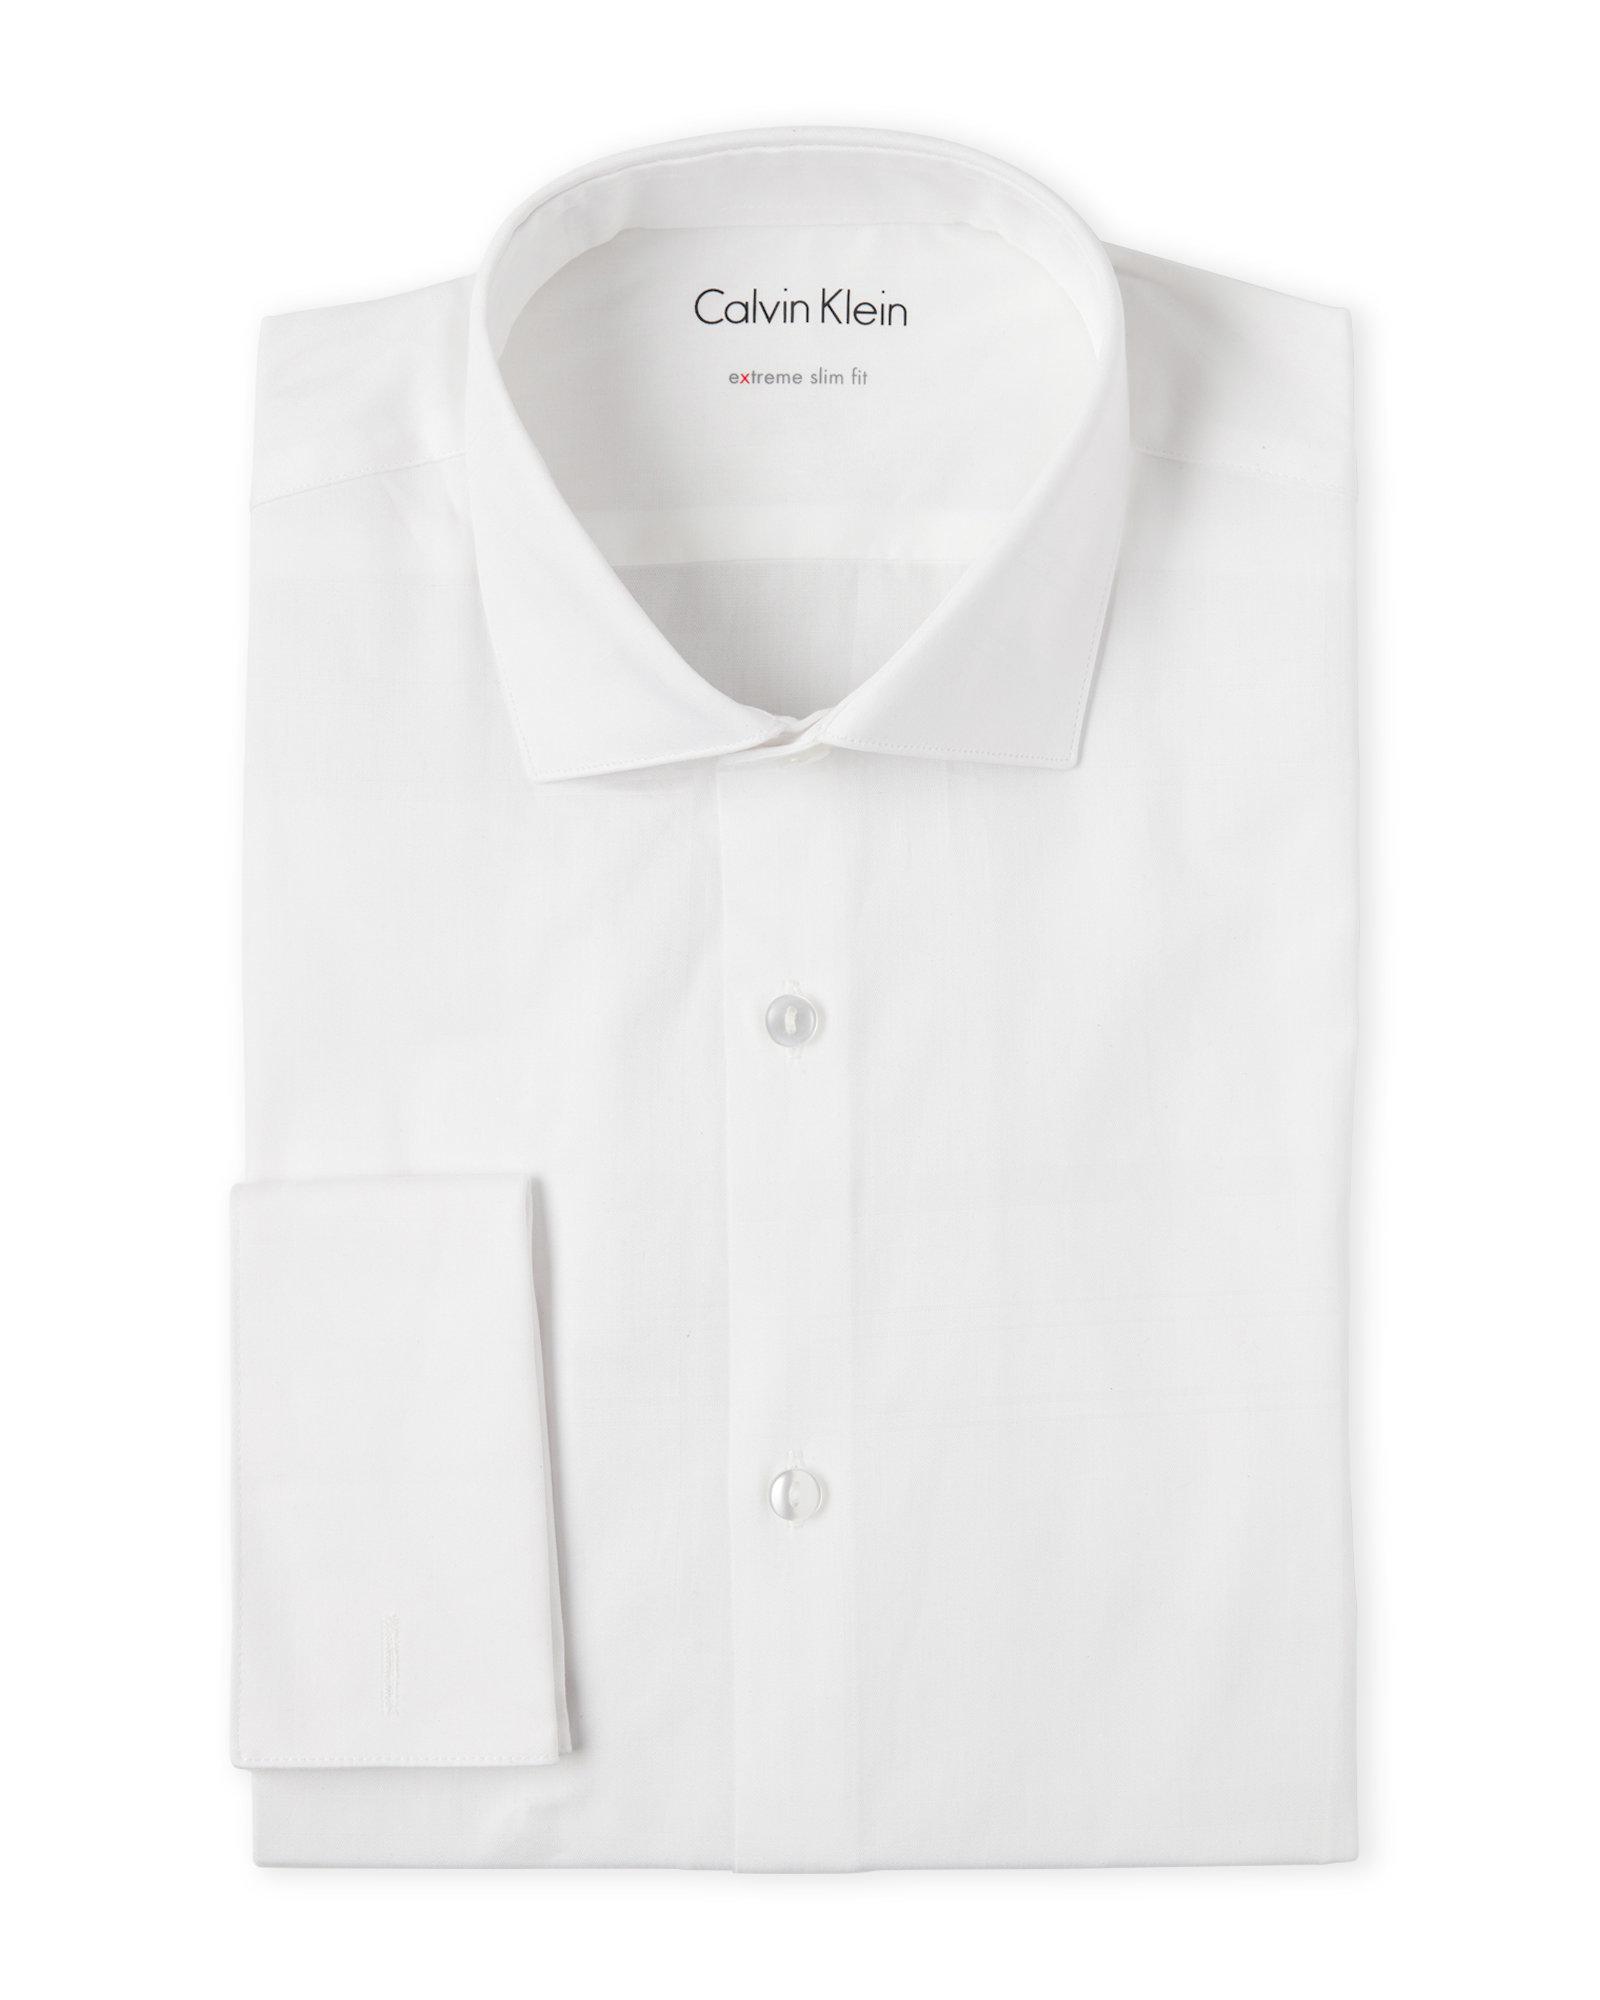 Calvin Klein White Extreme Slim Fit Dress Shirt in White for Men - Lyst